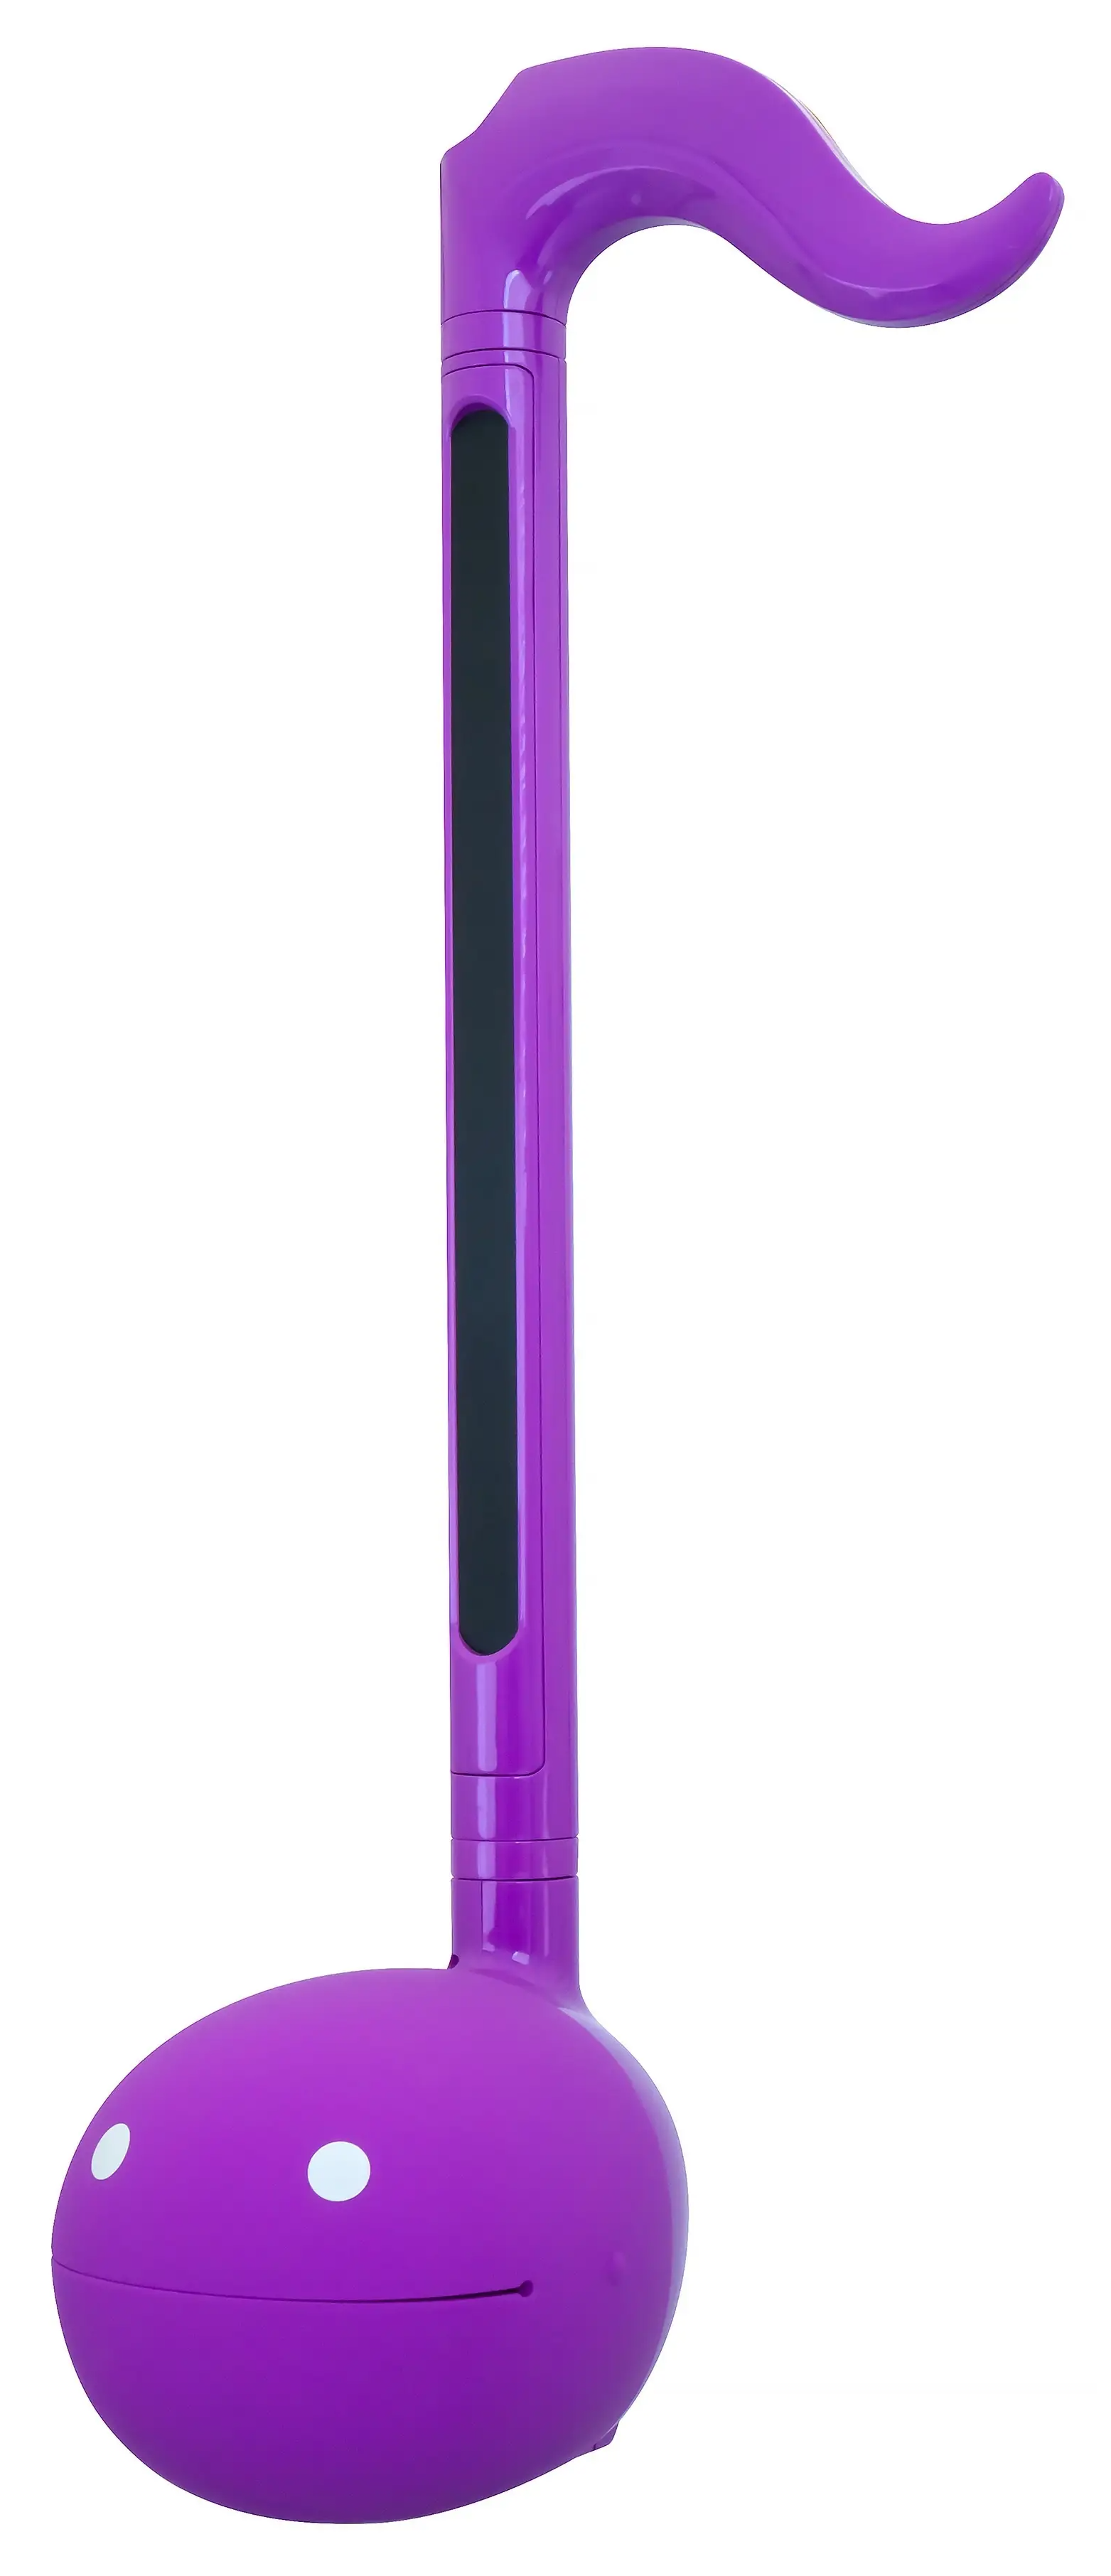 Otamatone Deluxe Colors: Purple Cube